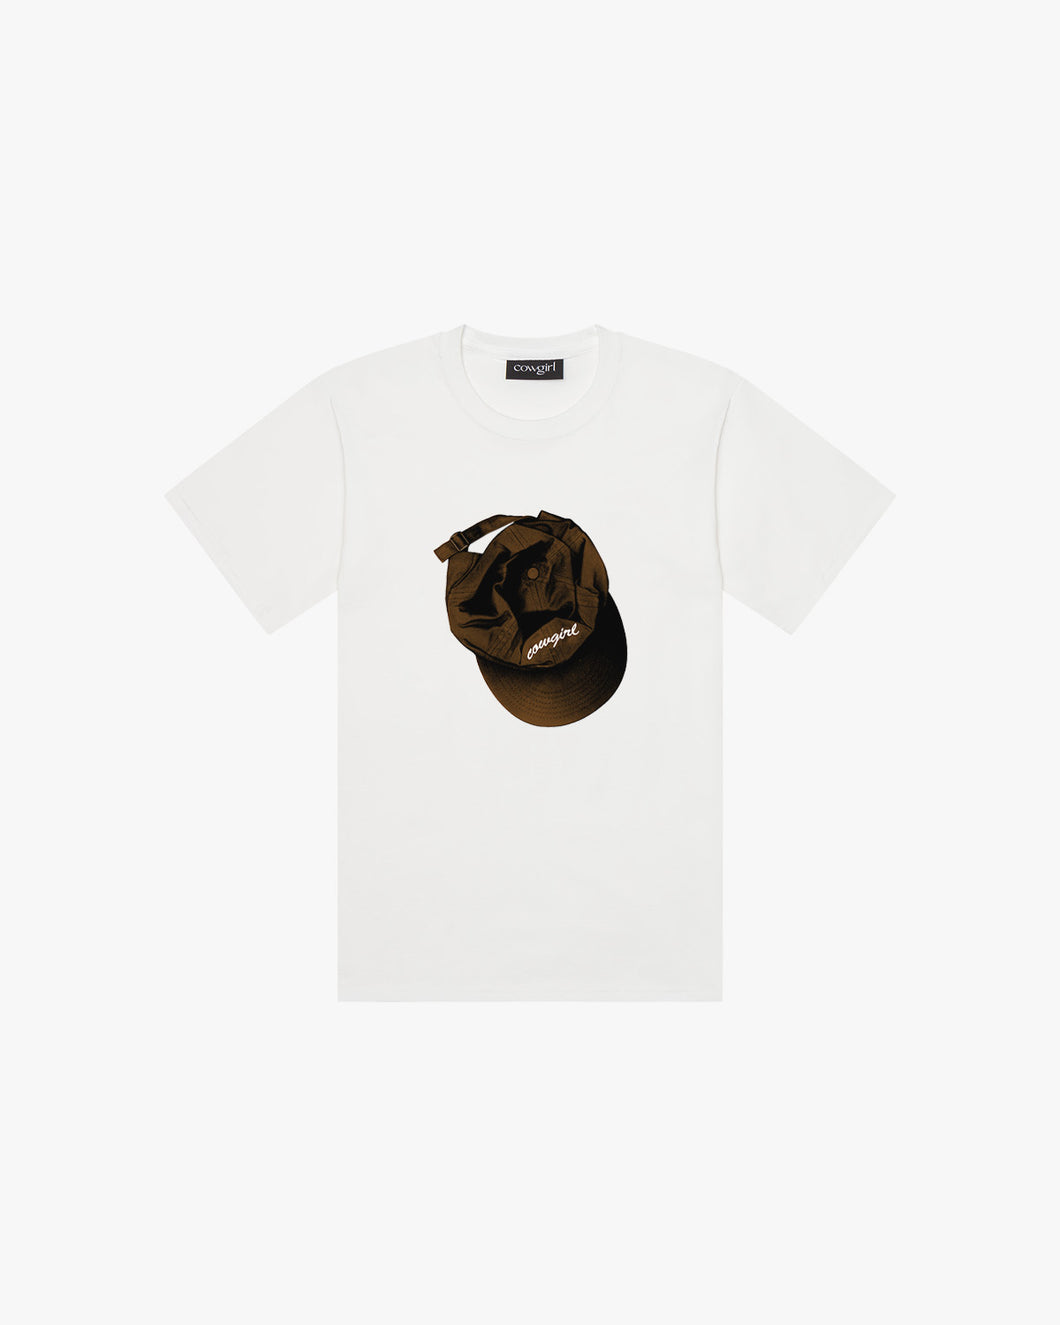 Brown Cap T Shirt (White, SMALL)